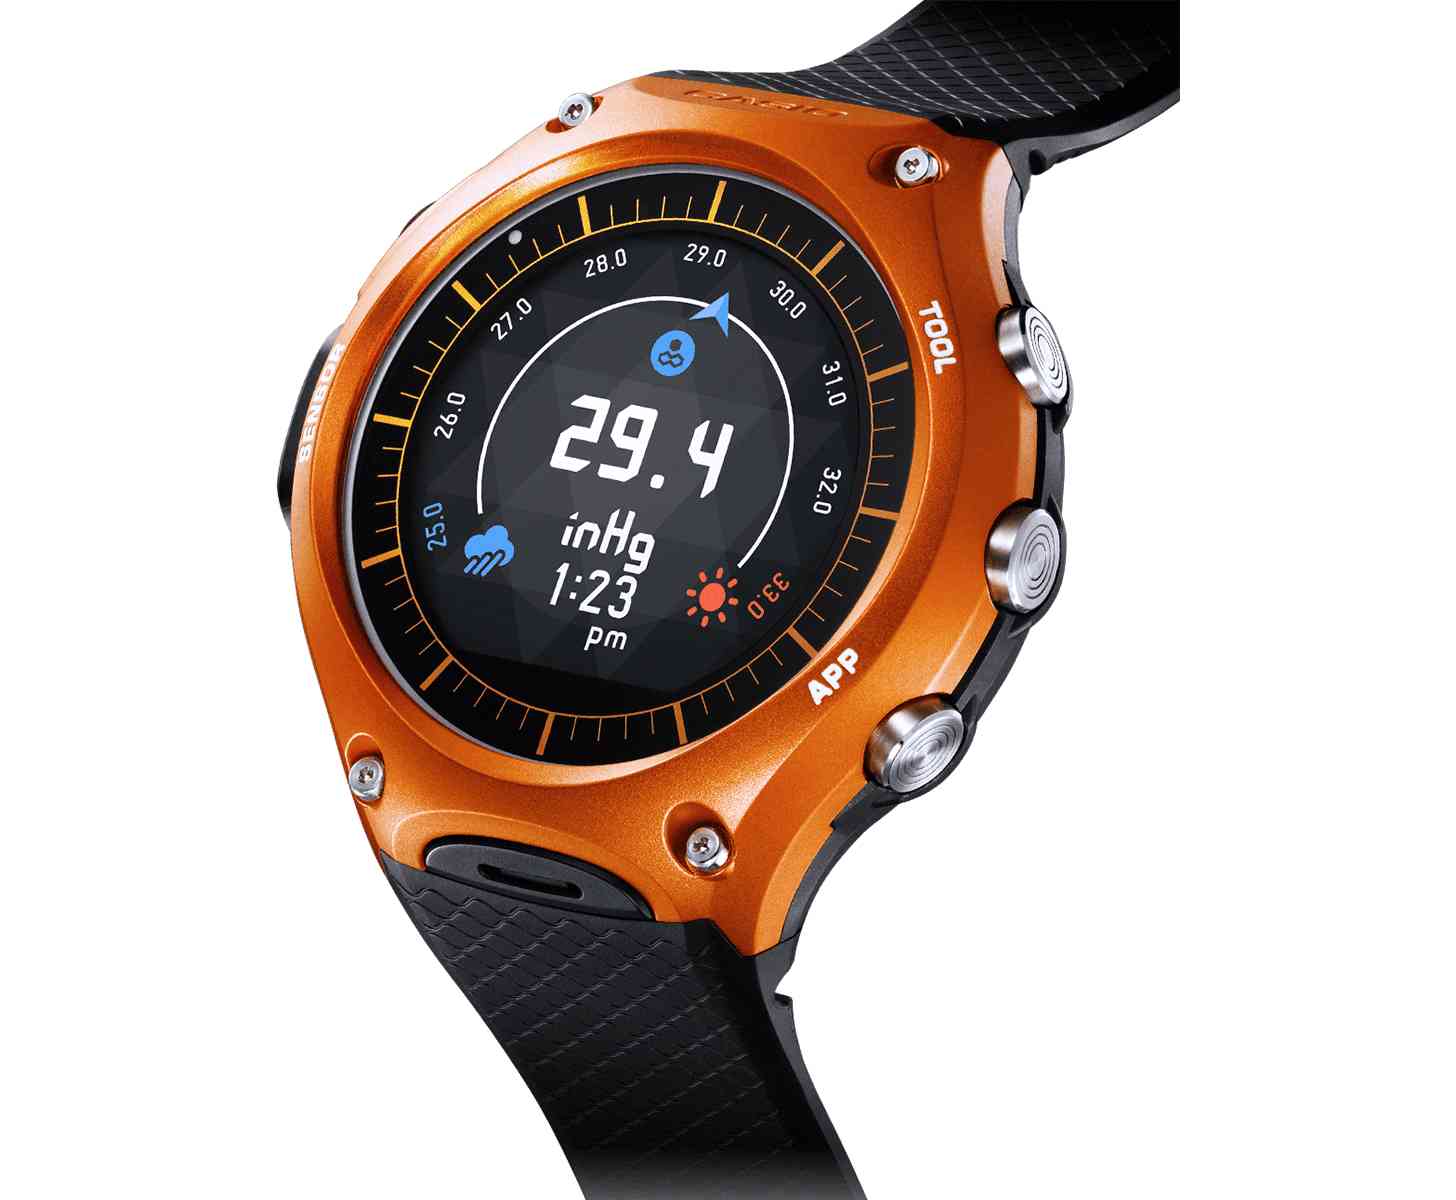 Casio WSD-F10 Android Wear smartwatch large orange